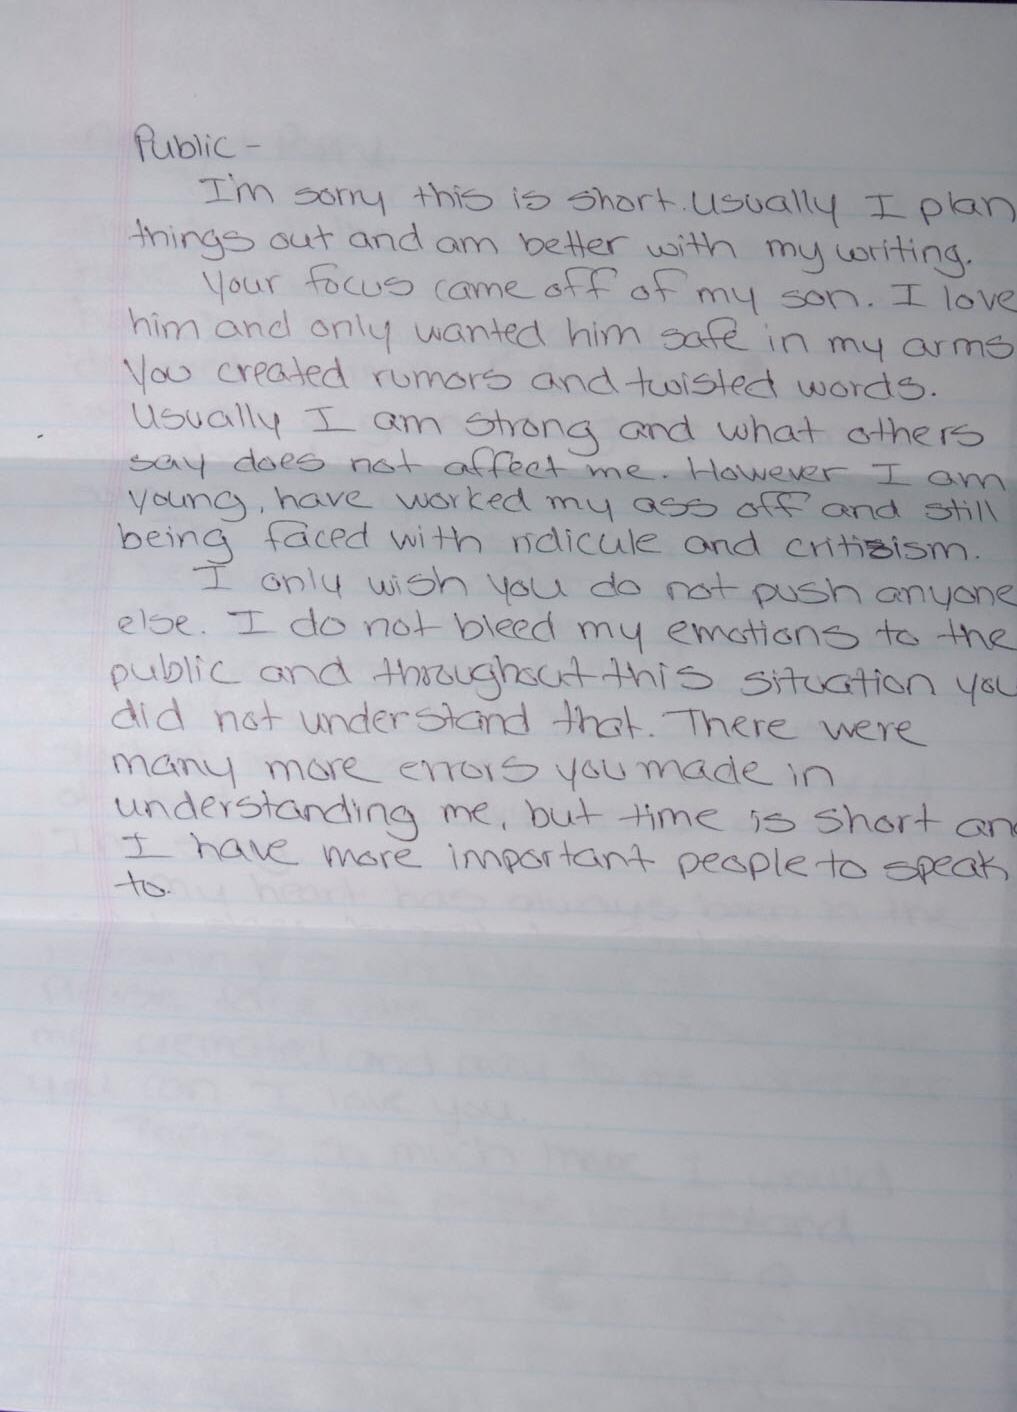 Statement Analysis ® Melinda Duckett Statement Analysis of Suicide Note pic